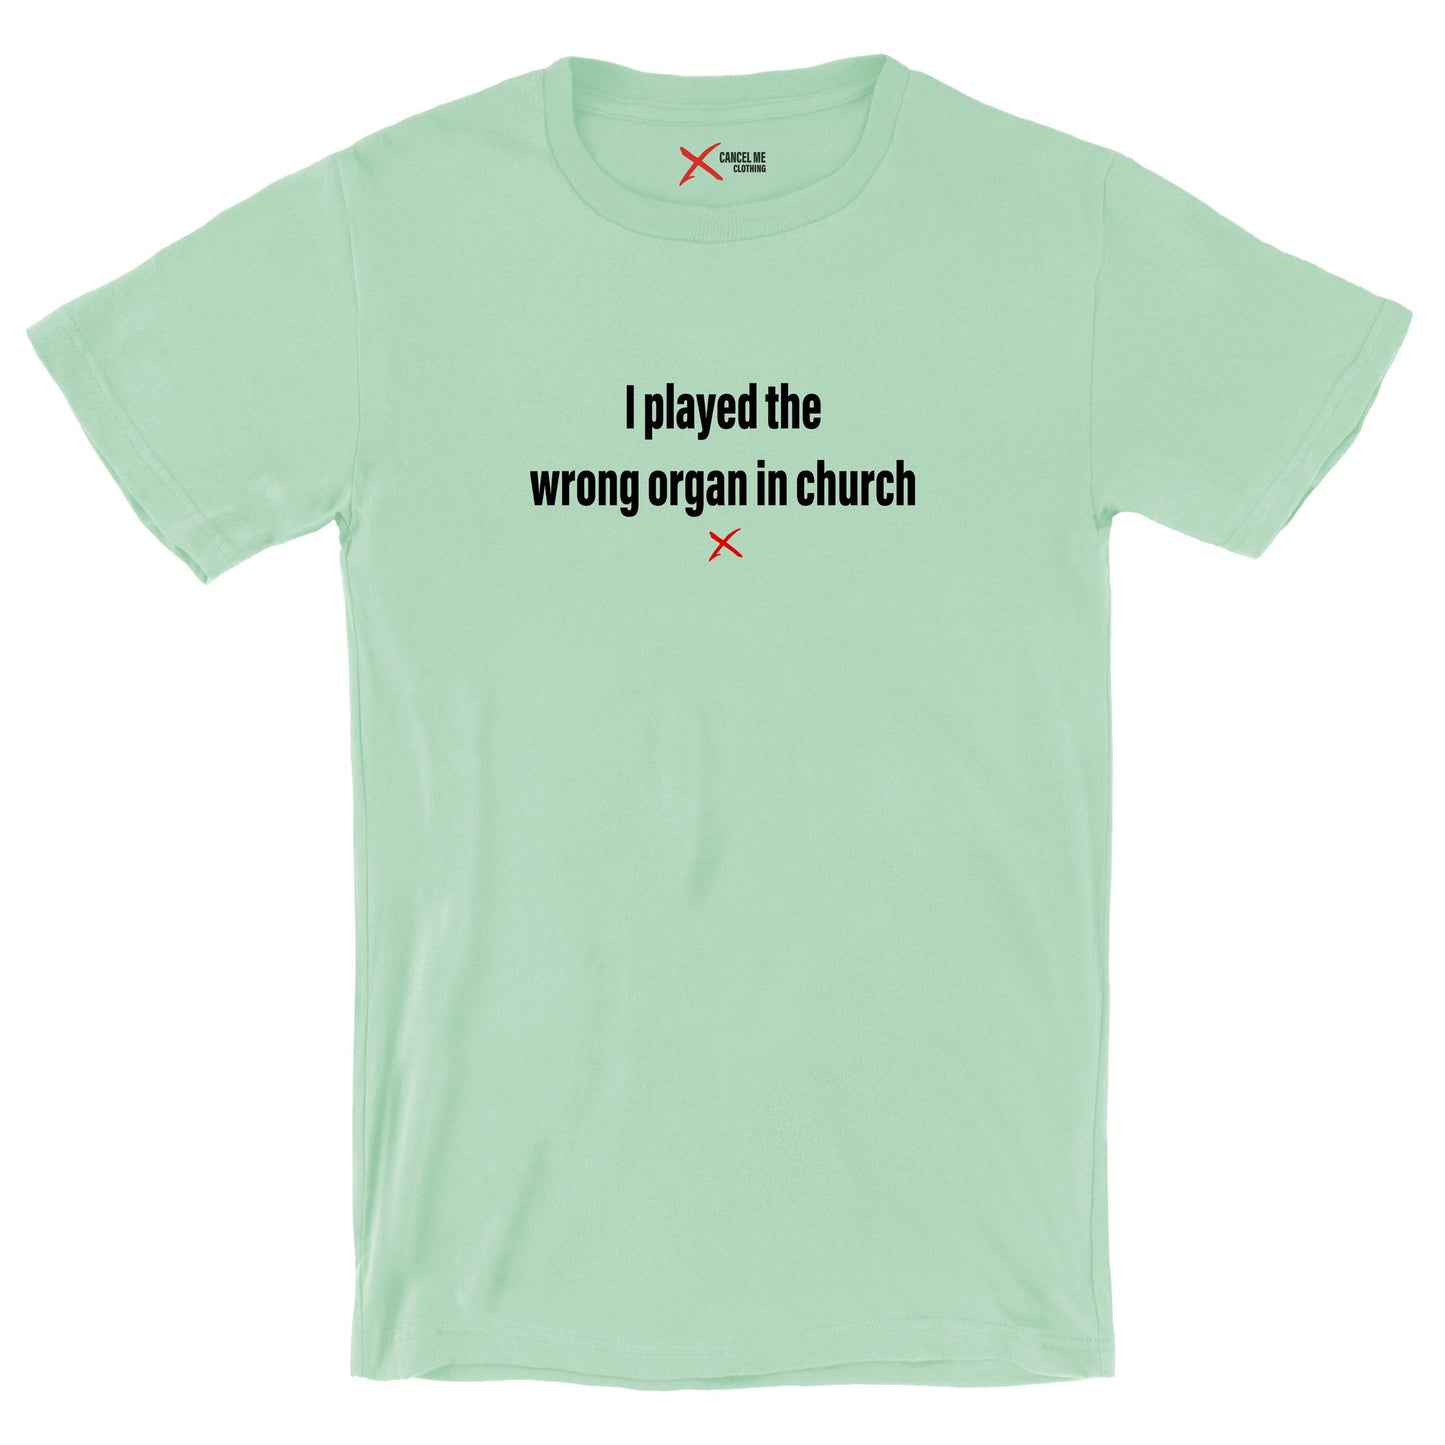 I played the wrong organ in church - Shirt